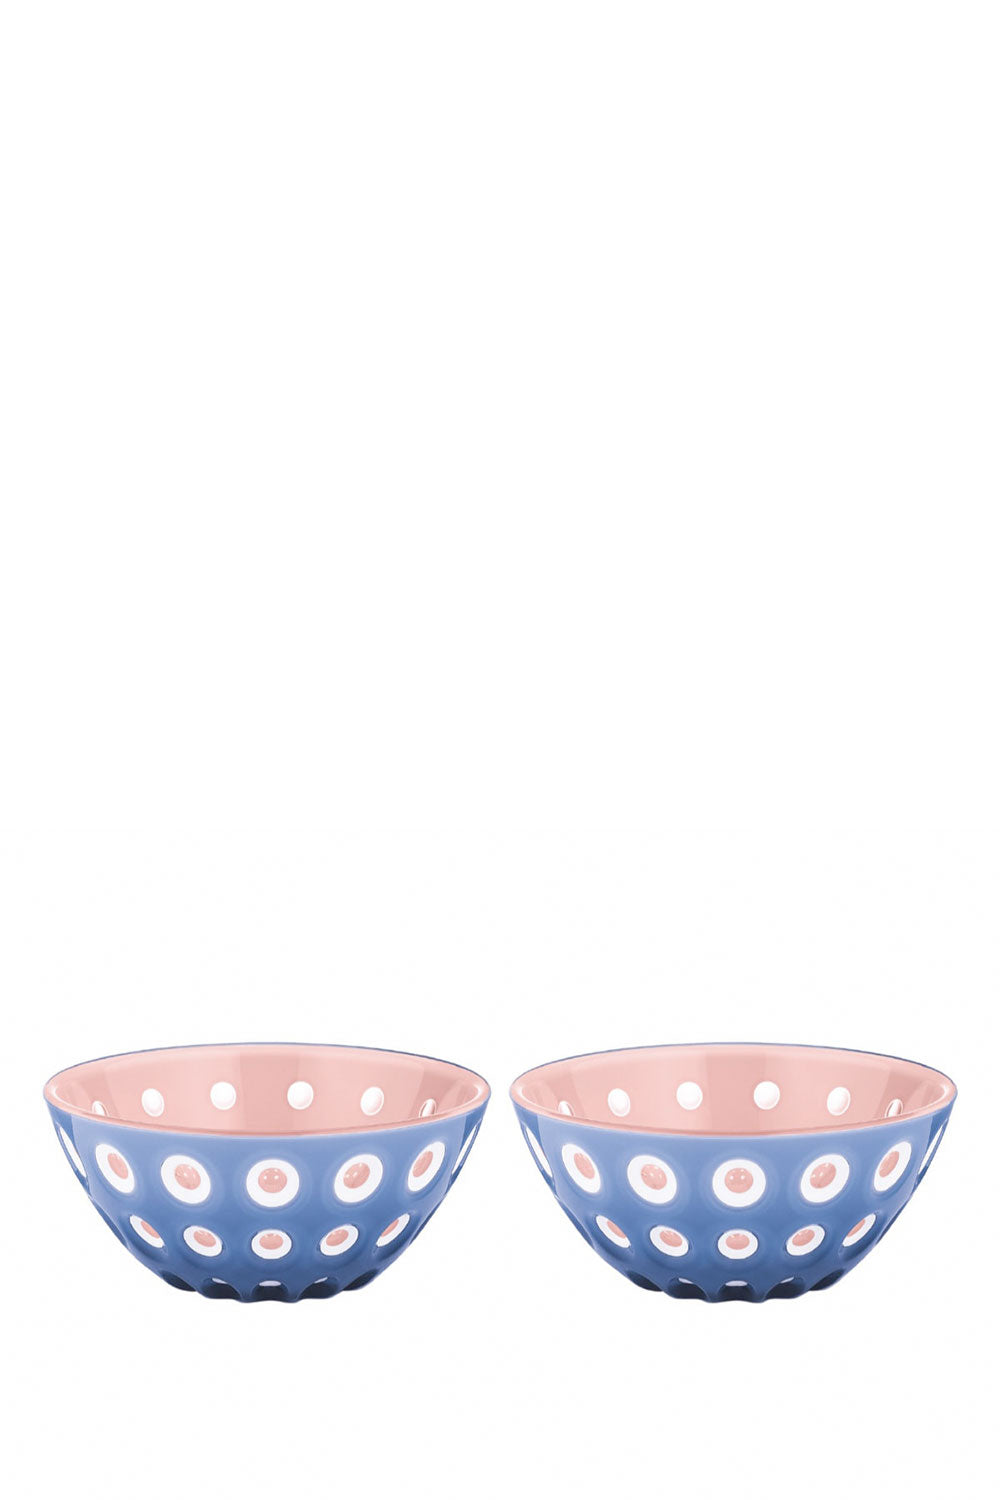 Murrine Pink & Blue Bowls Set Of 2, 12 cm